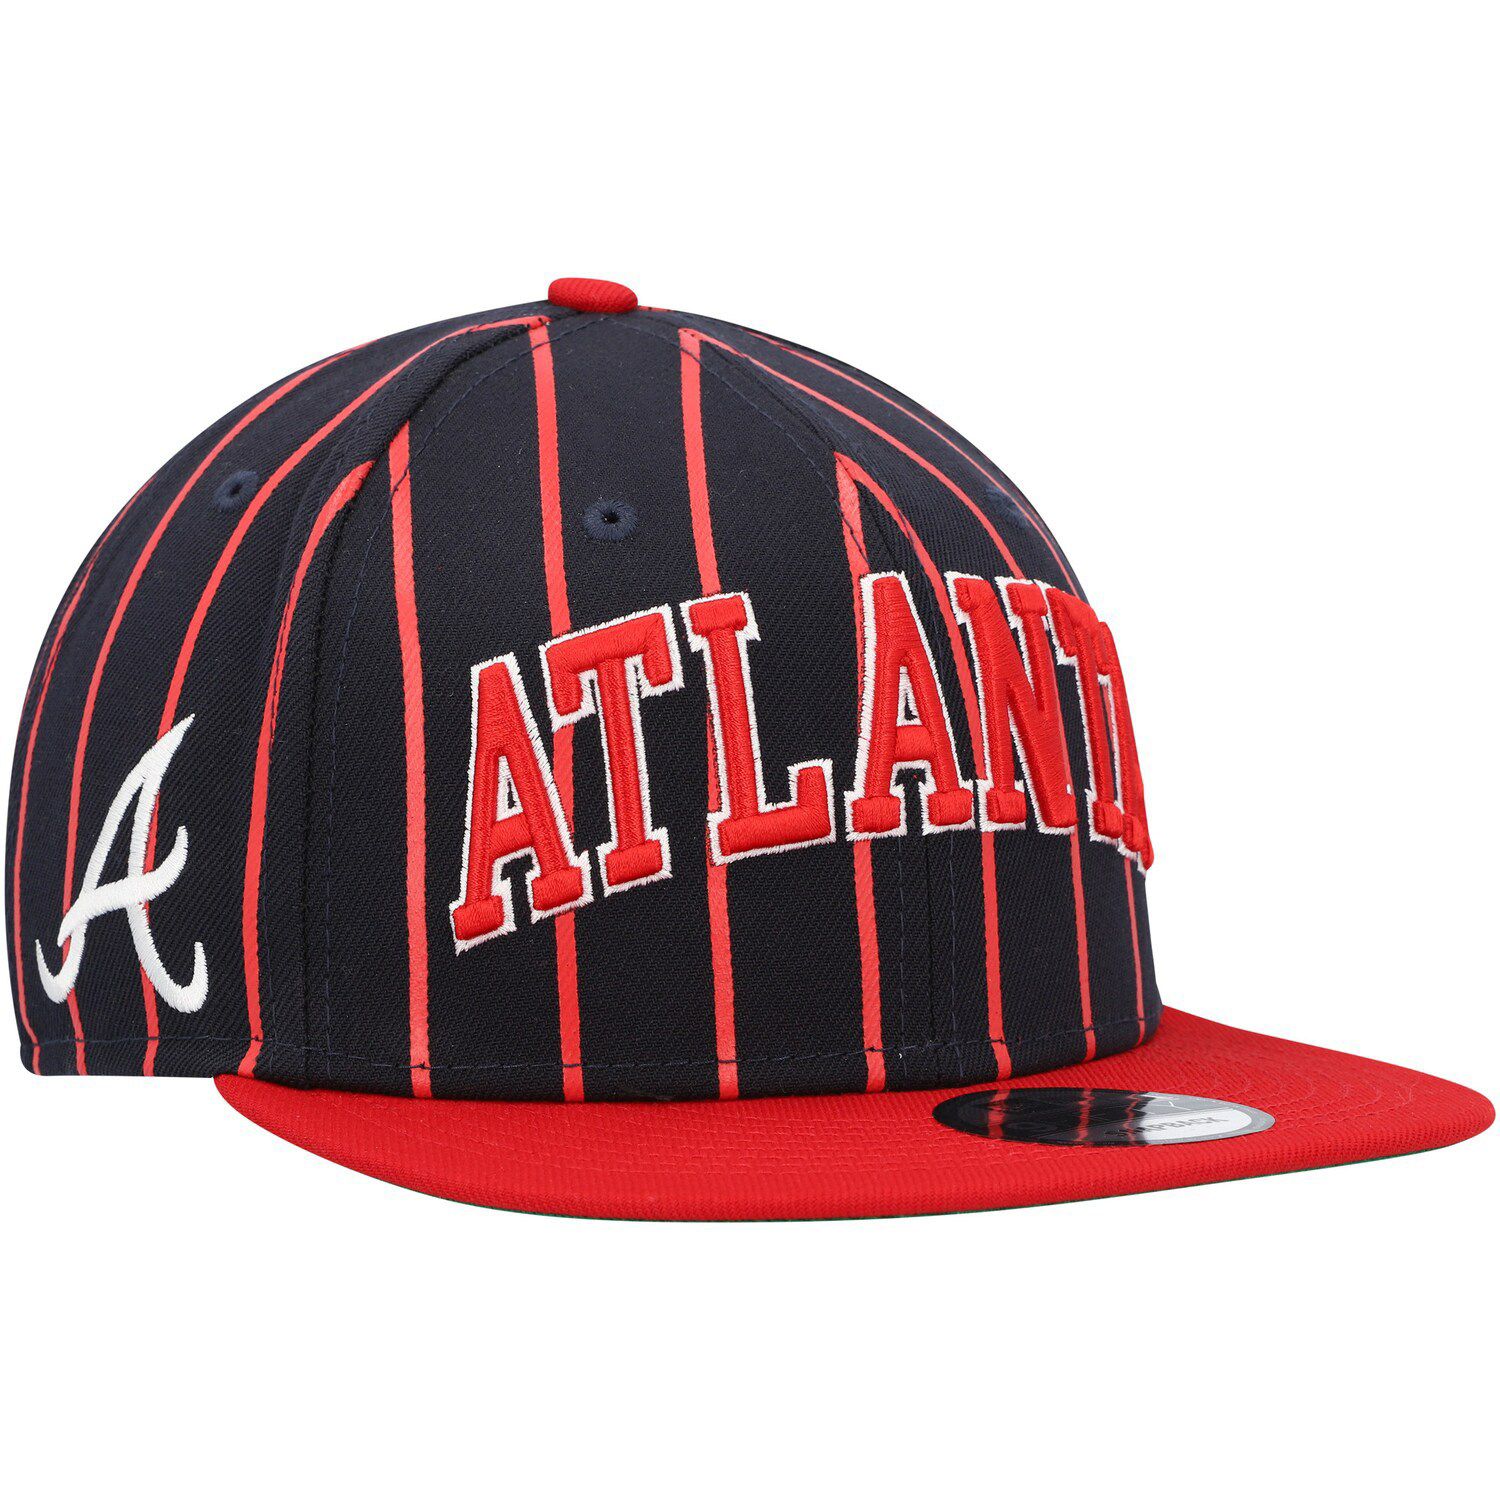 Women's New Era Navy Atlanta Braves Leaves 9TWENTY Adjustable Hat